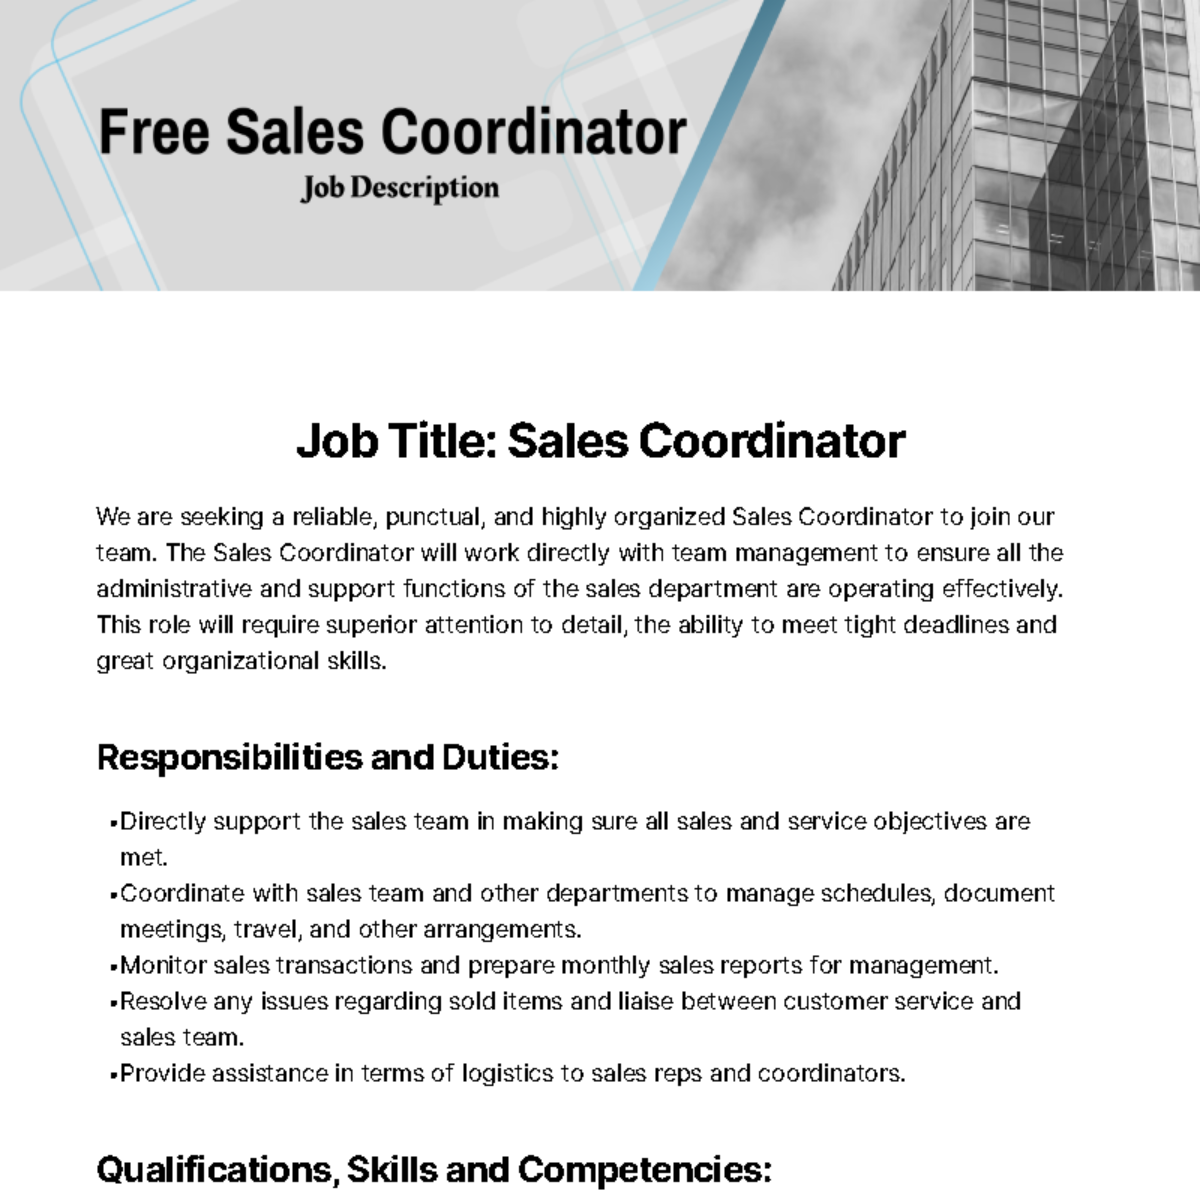 Free Sales Coordinator Job Description Template